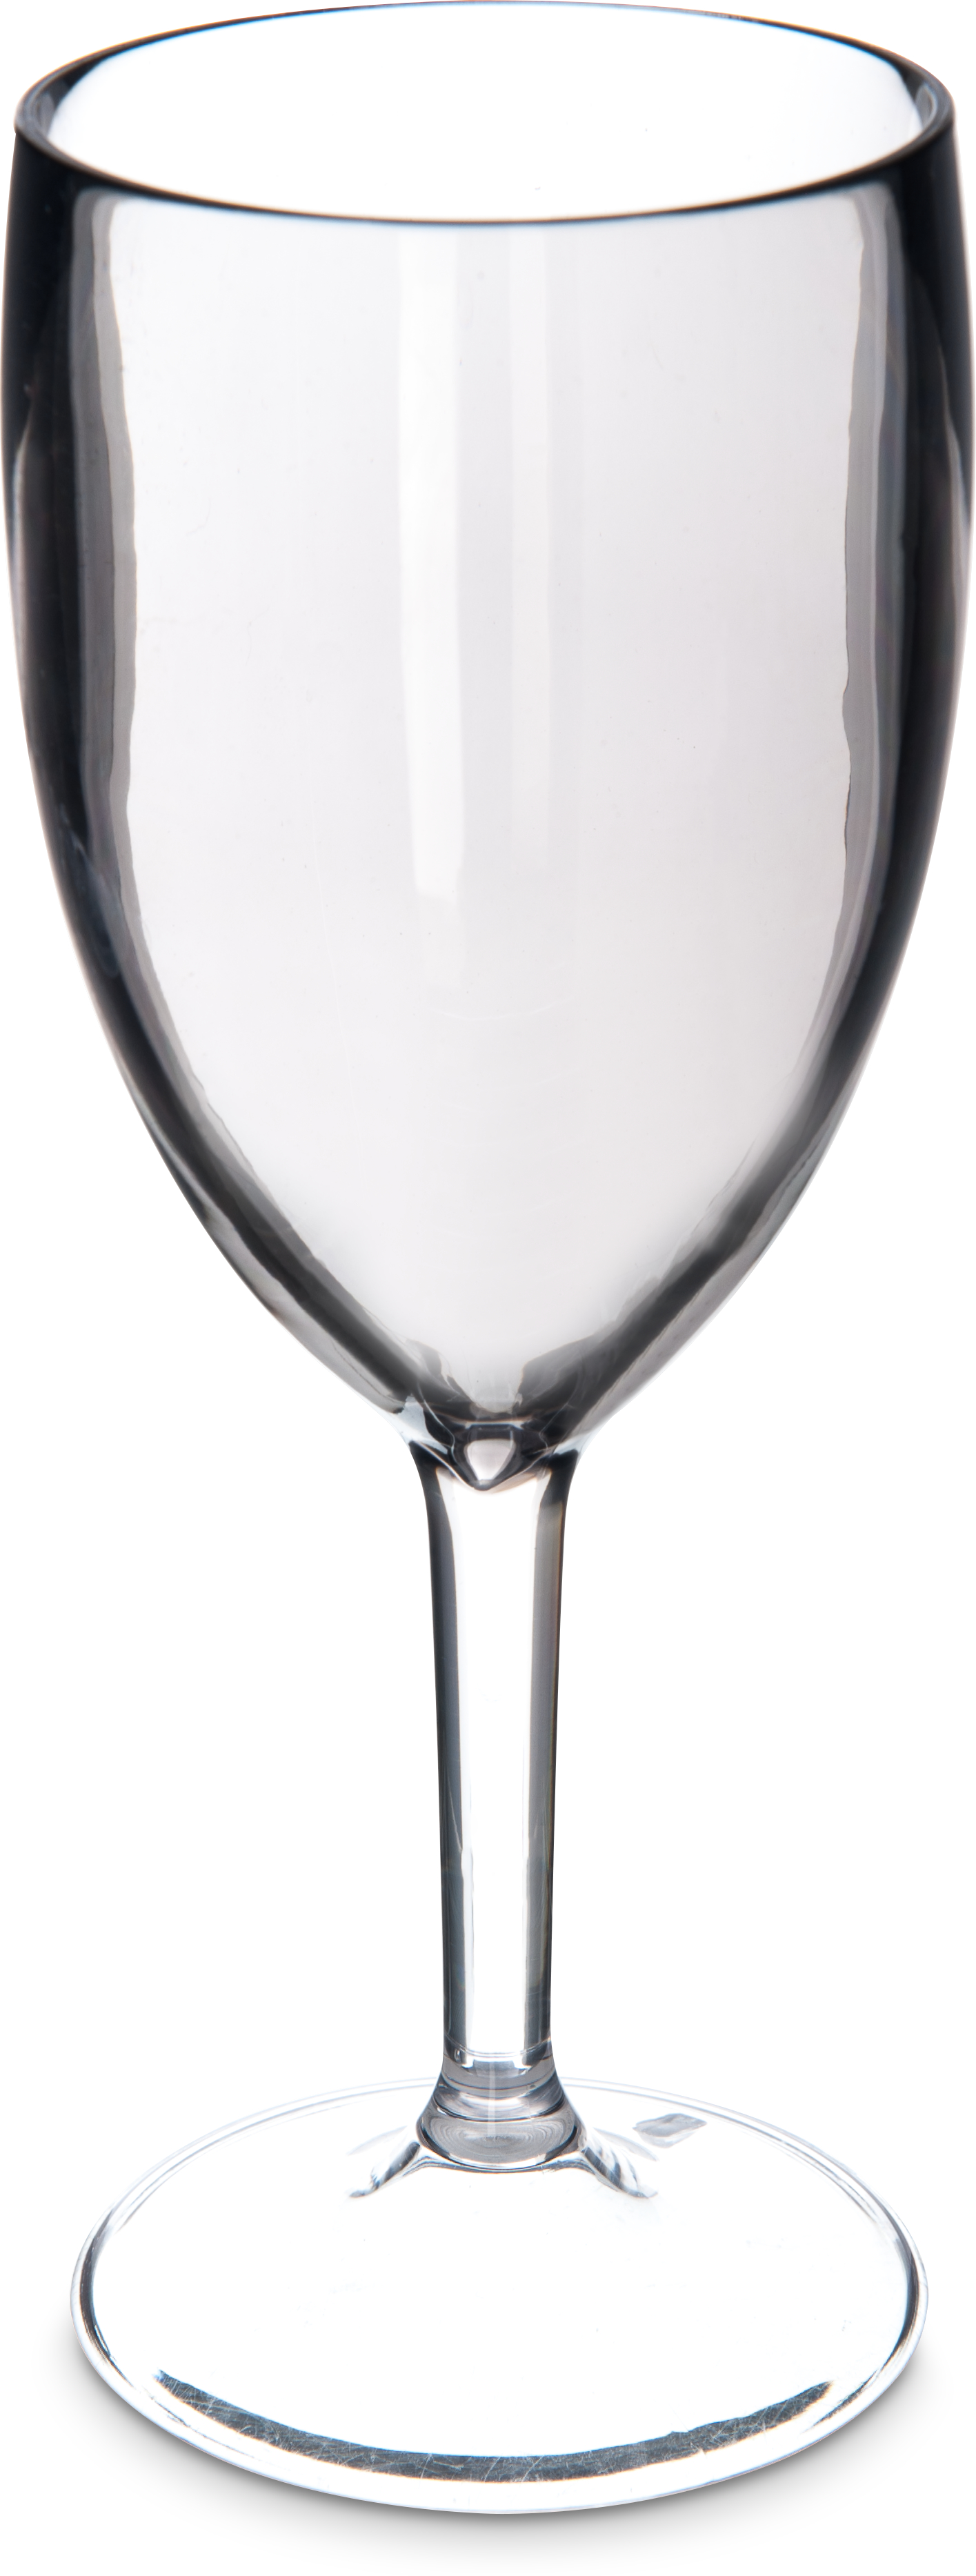 Epicure Cased Wine Goblet 12 oz - Smoke